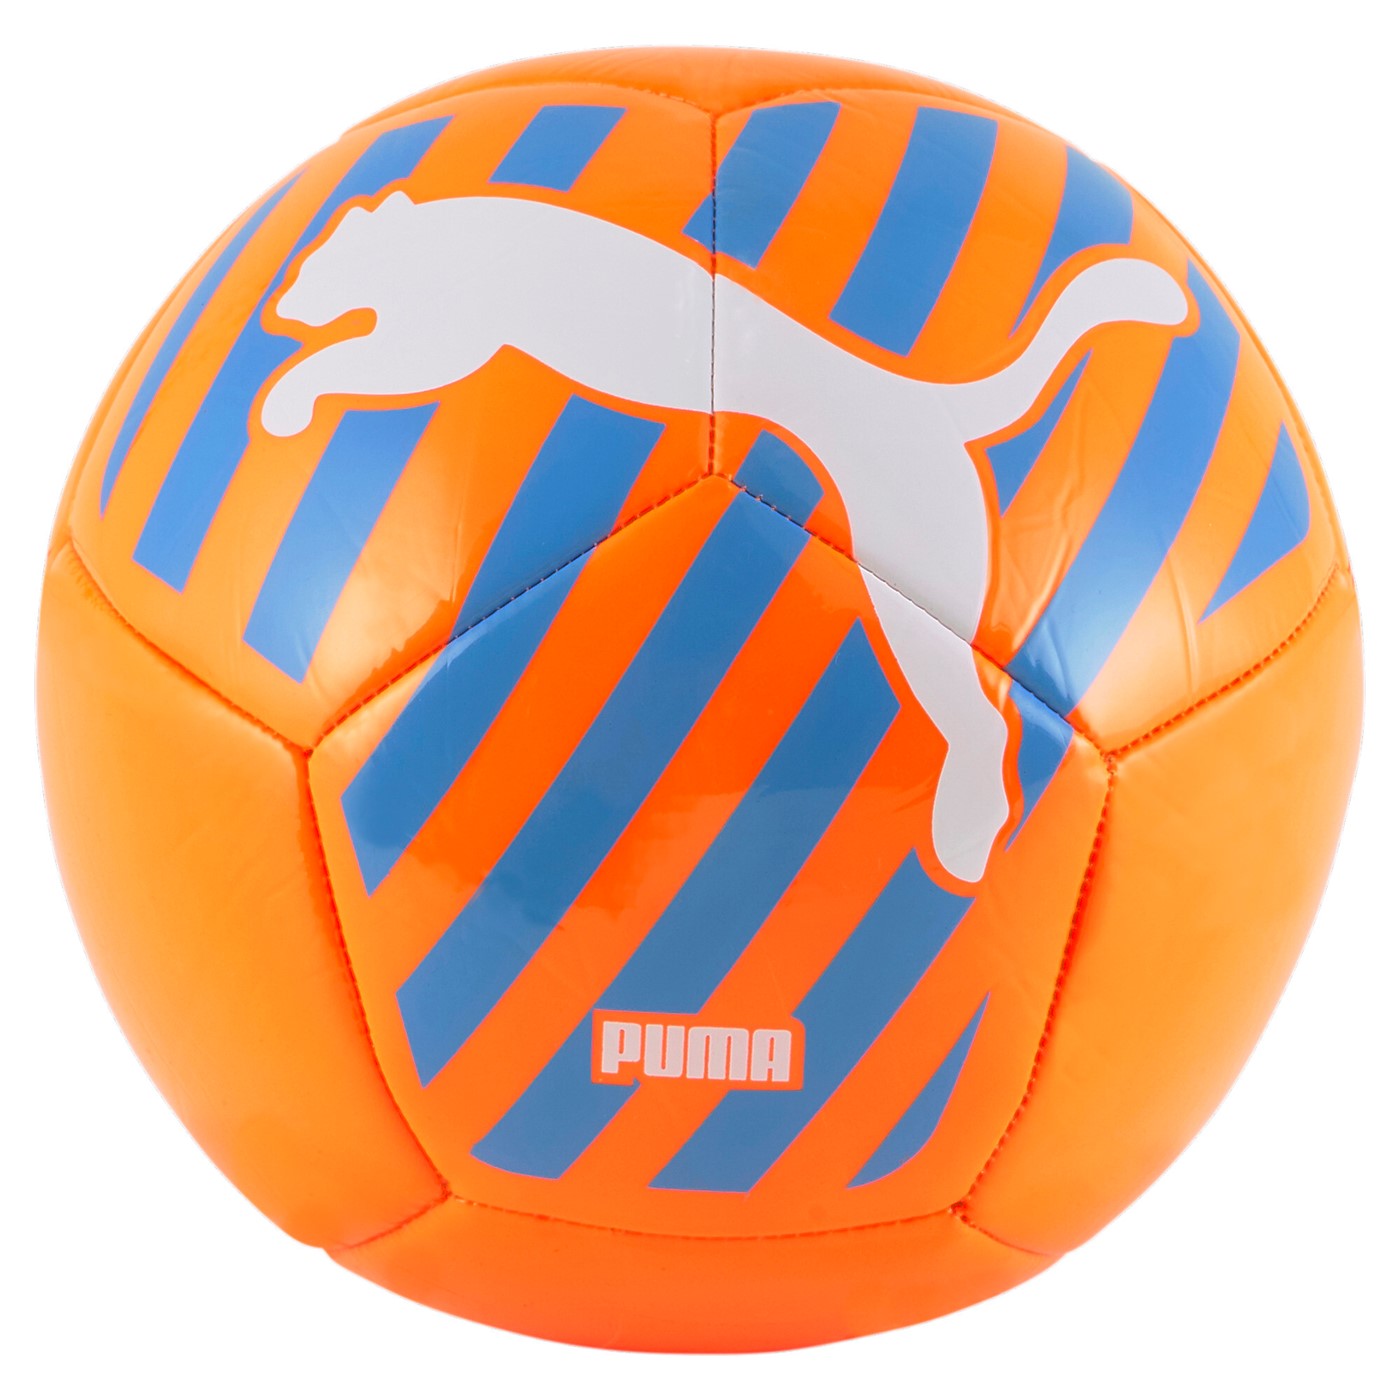 Puma pallone da calcio Big Cat 083994-01 ultra orange-blue glimmer Size 5